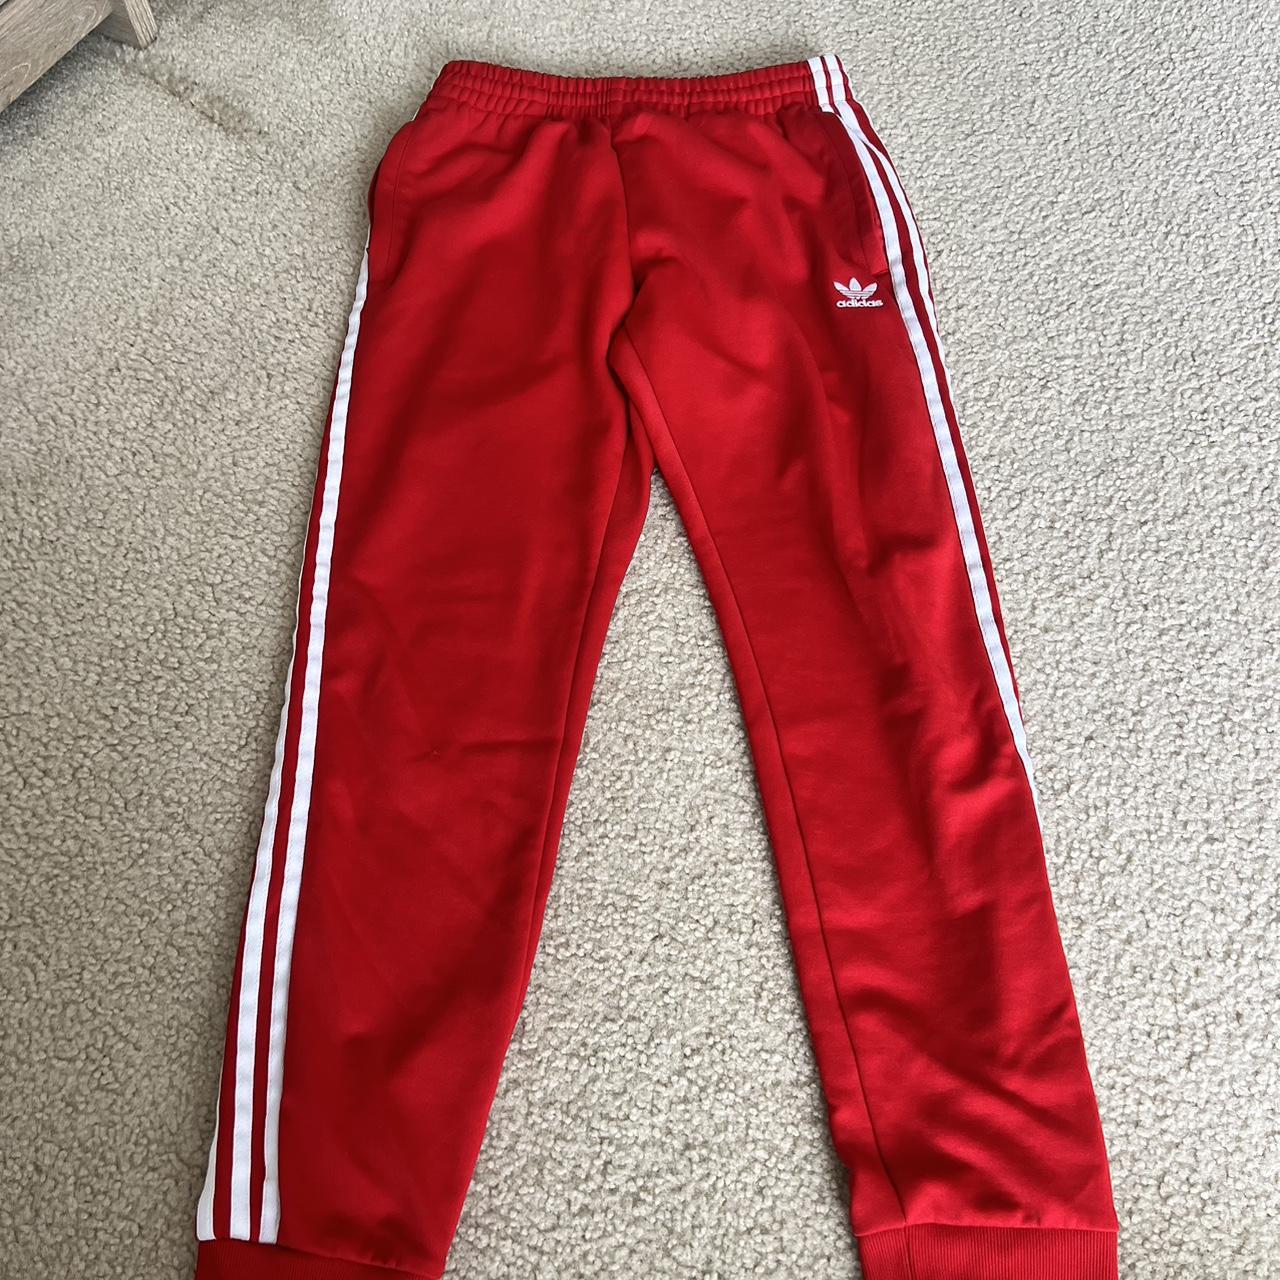 Red adidas tracksuit pants - Depop